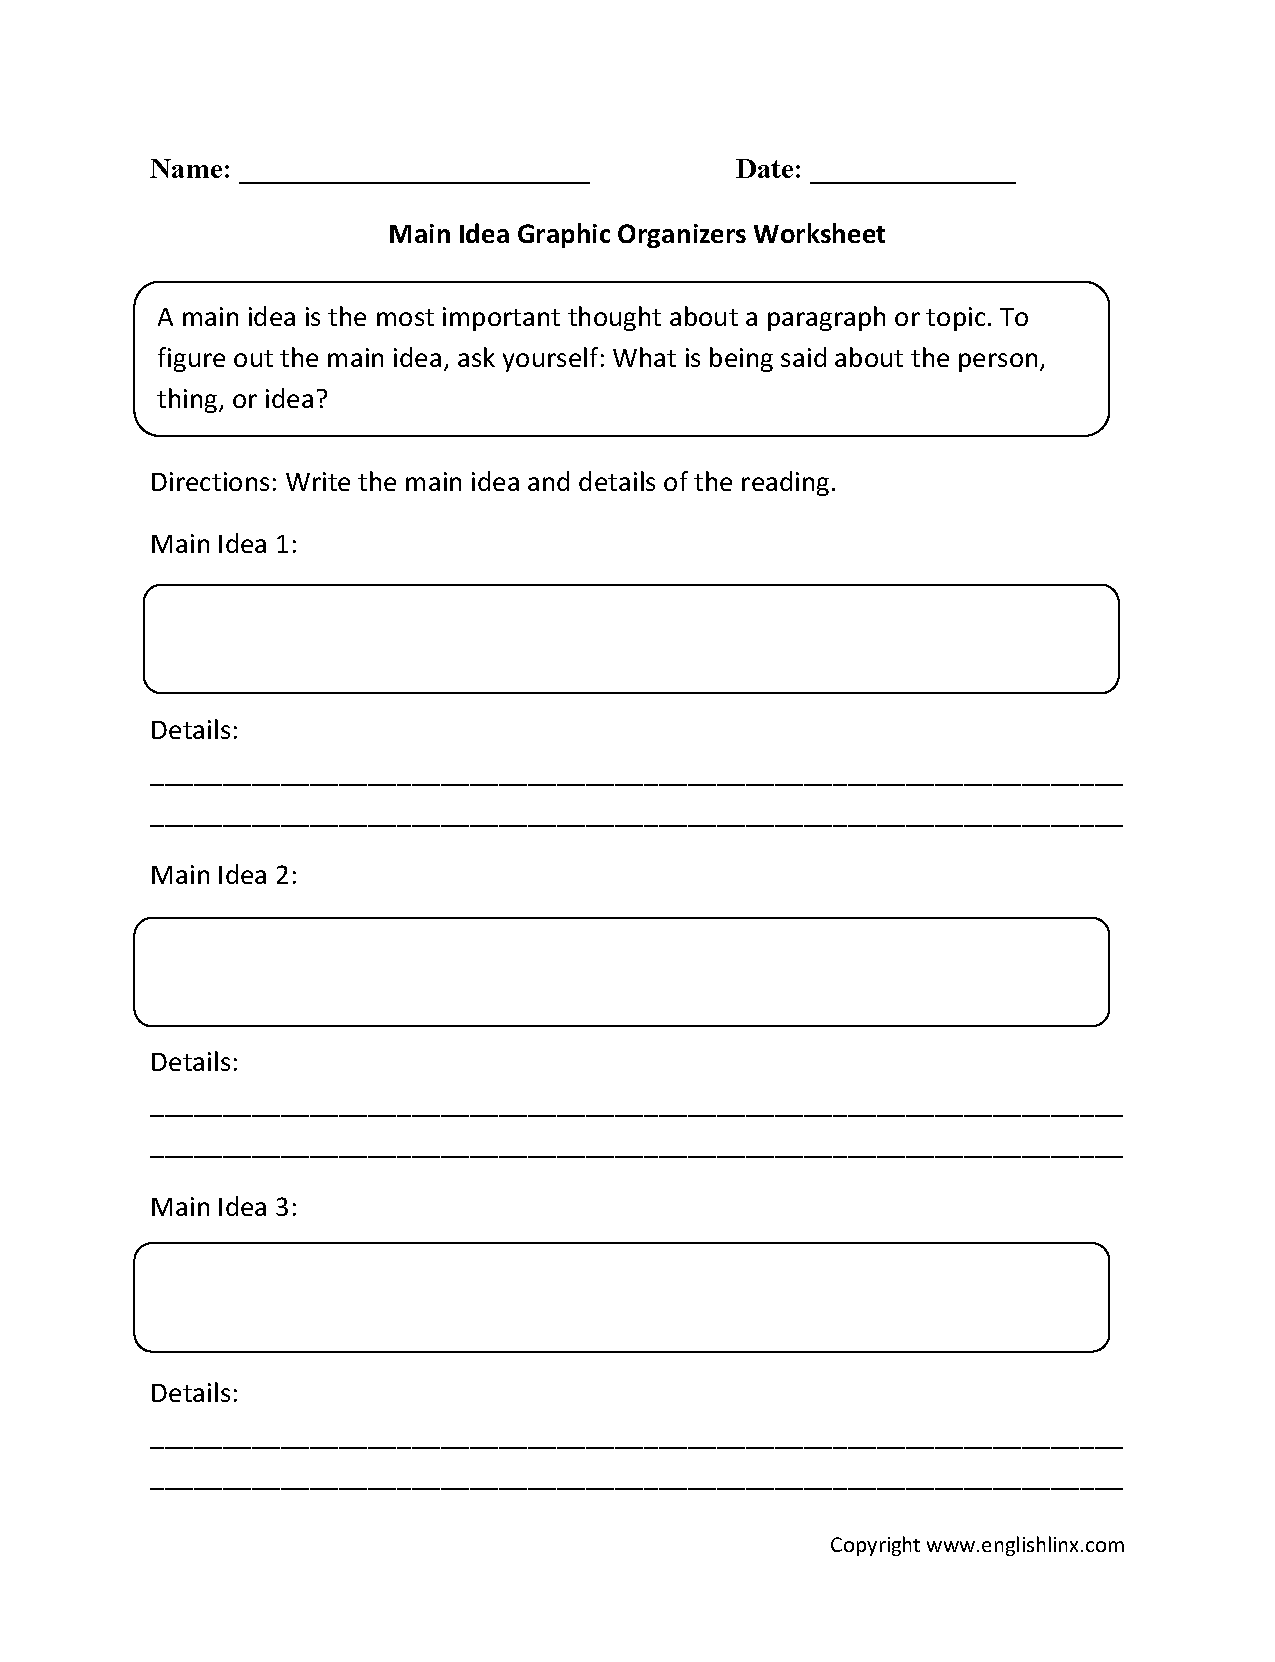 Main Idea Graphic Organizers Worksheets